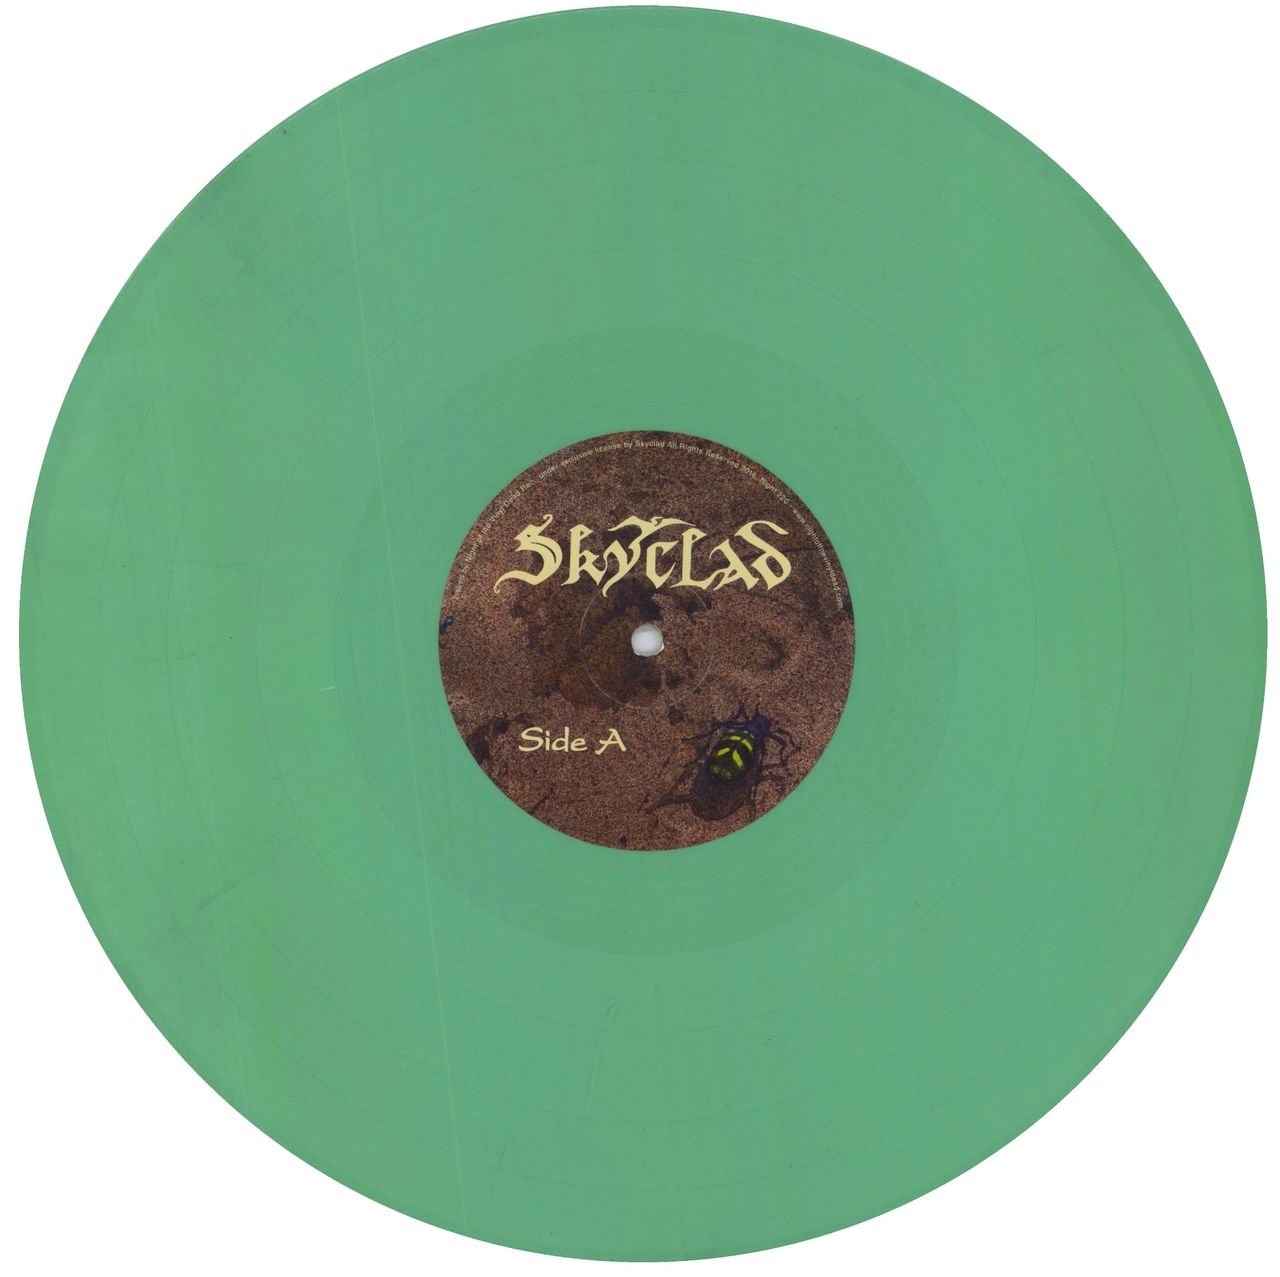 Skyclad Oui Avant-garde À Chance Italian 2-LP vinyl set — RareVinyl.com